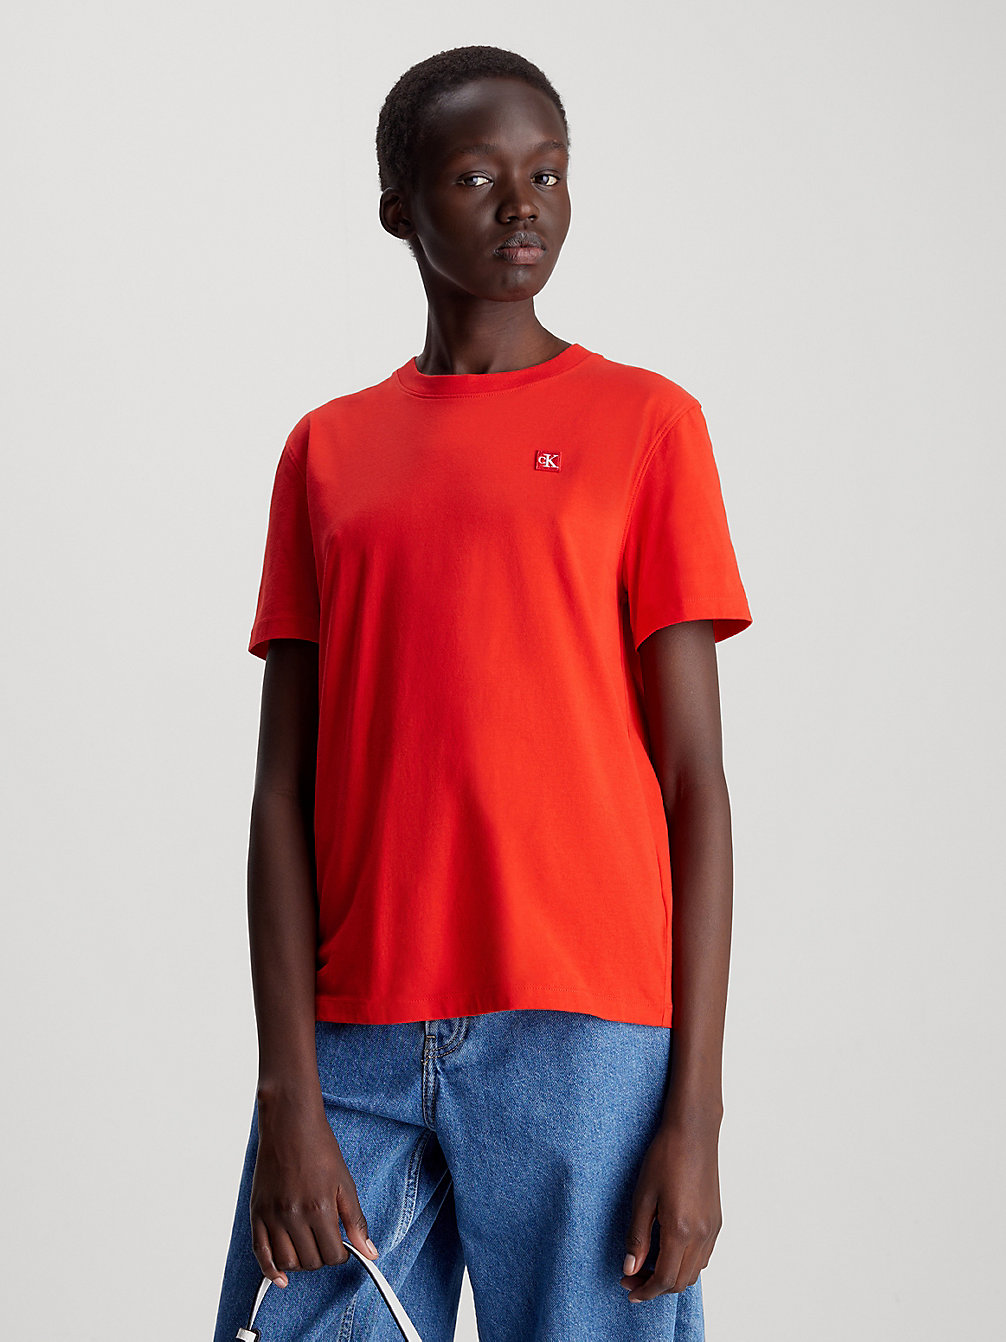 T-Shirt En Coton Avec Insigne > FIERY RED > undefined Femmes > Calvin Klein